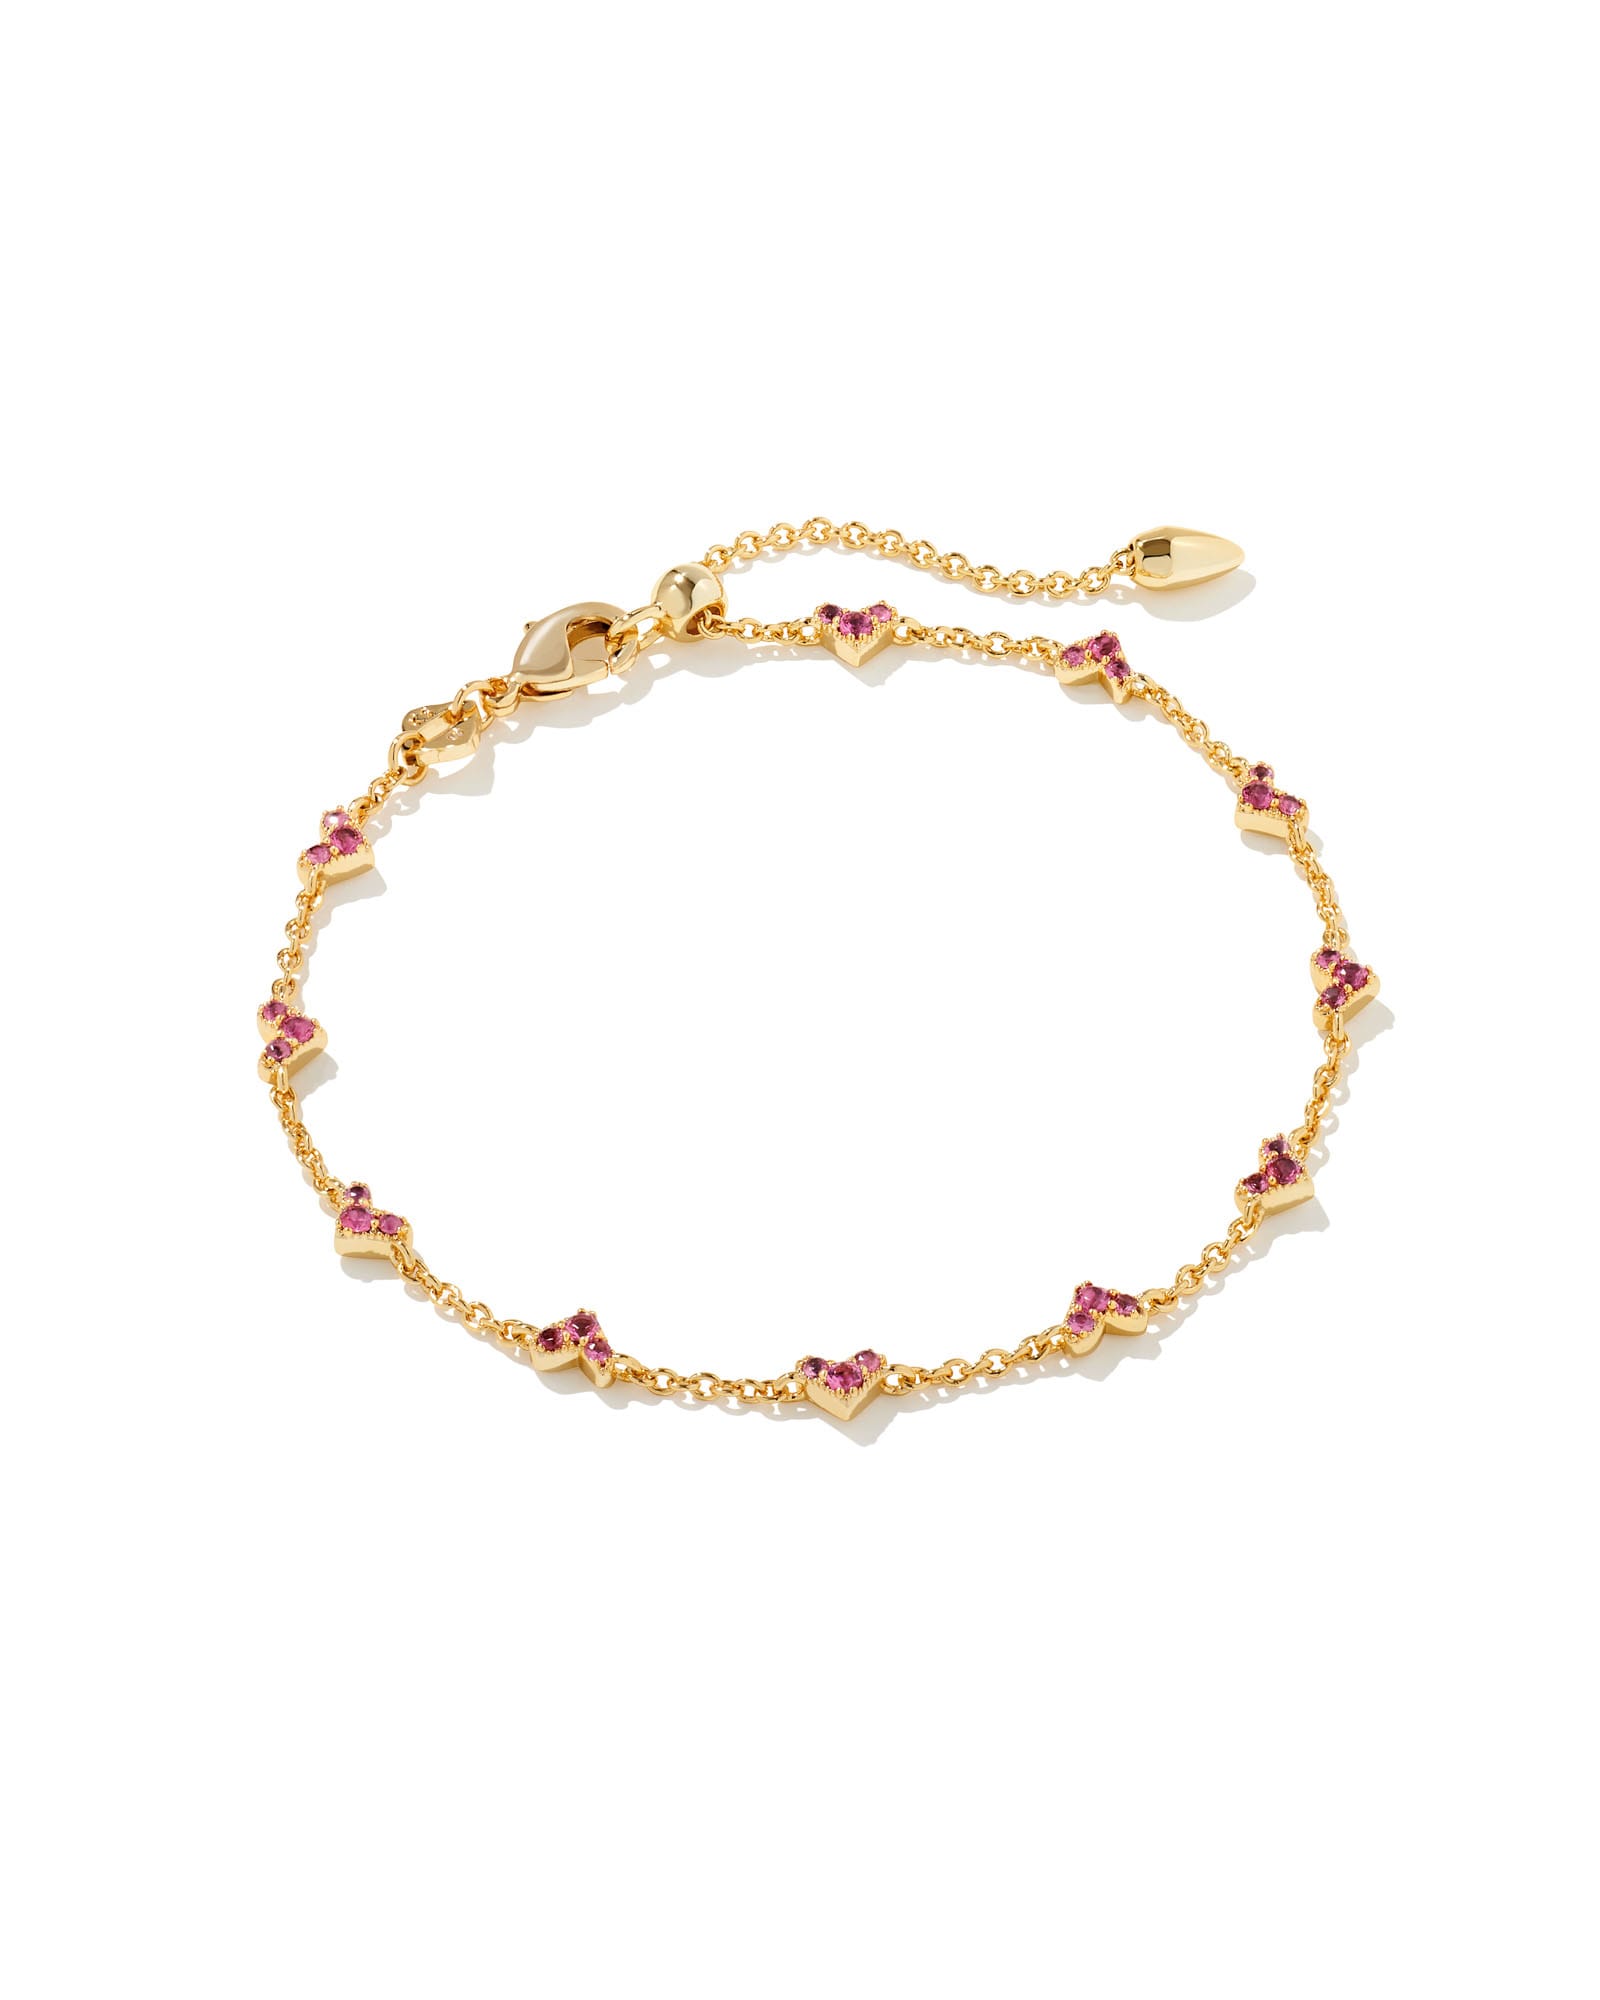 Haven Gold Crystal Heart Delicate Chain Bracelet in Pink Crystal | Kendra Scott